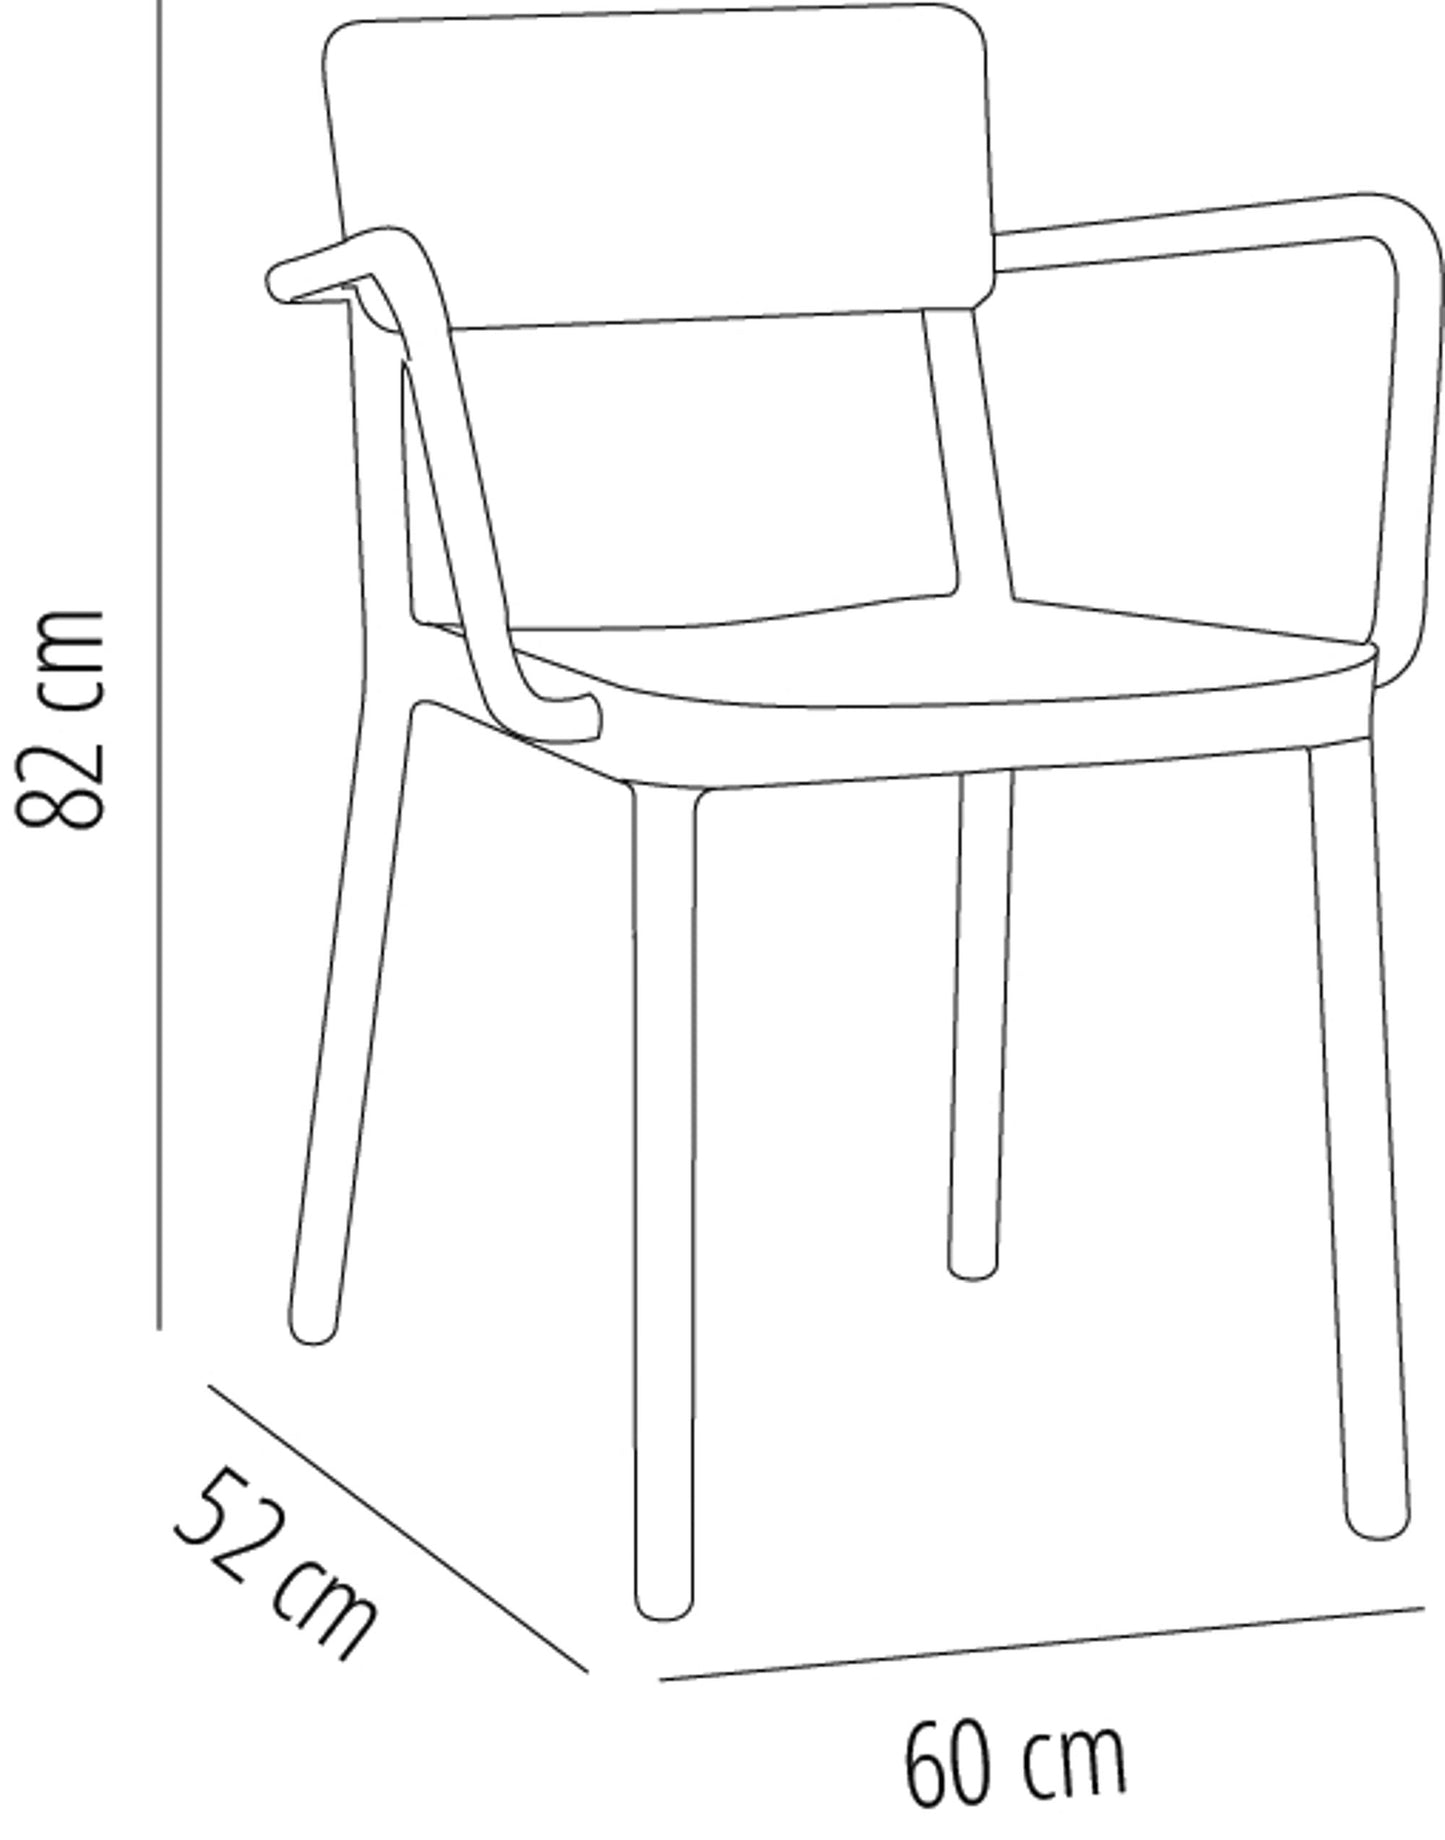 Resol lisboa set 2 silla con brazos interior, exterior chocolate